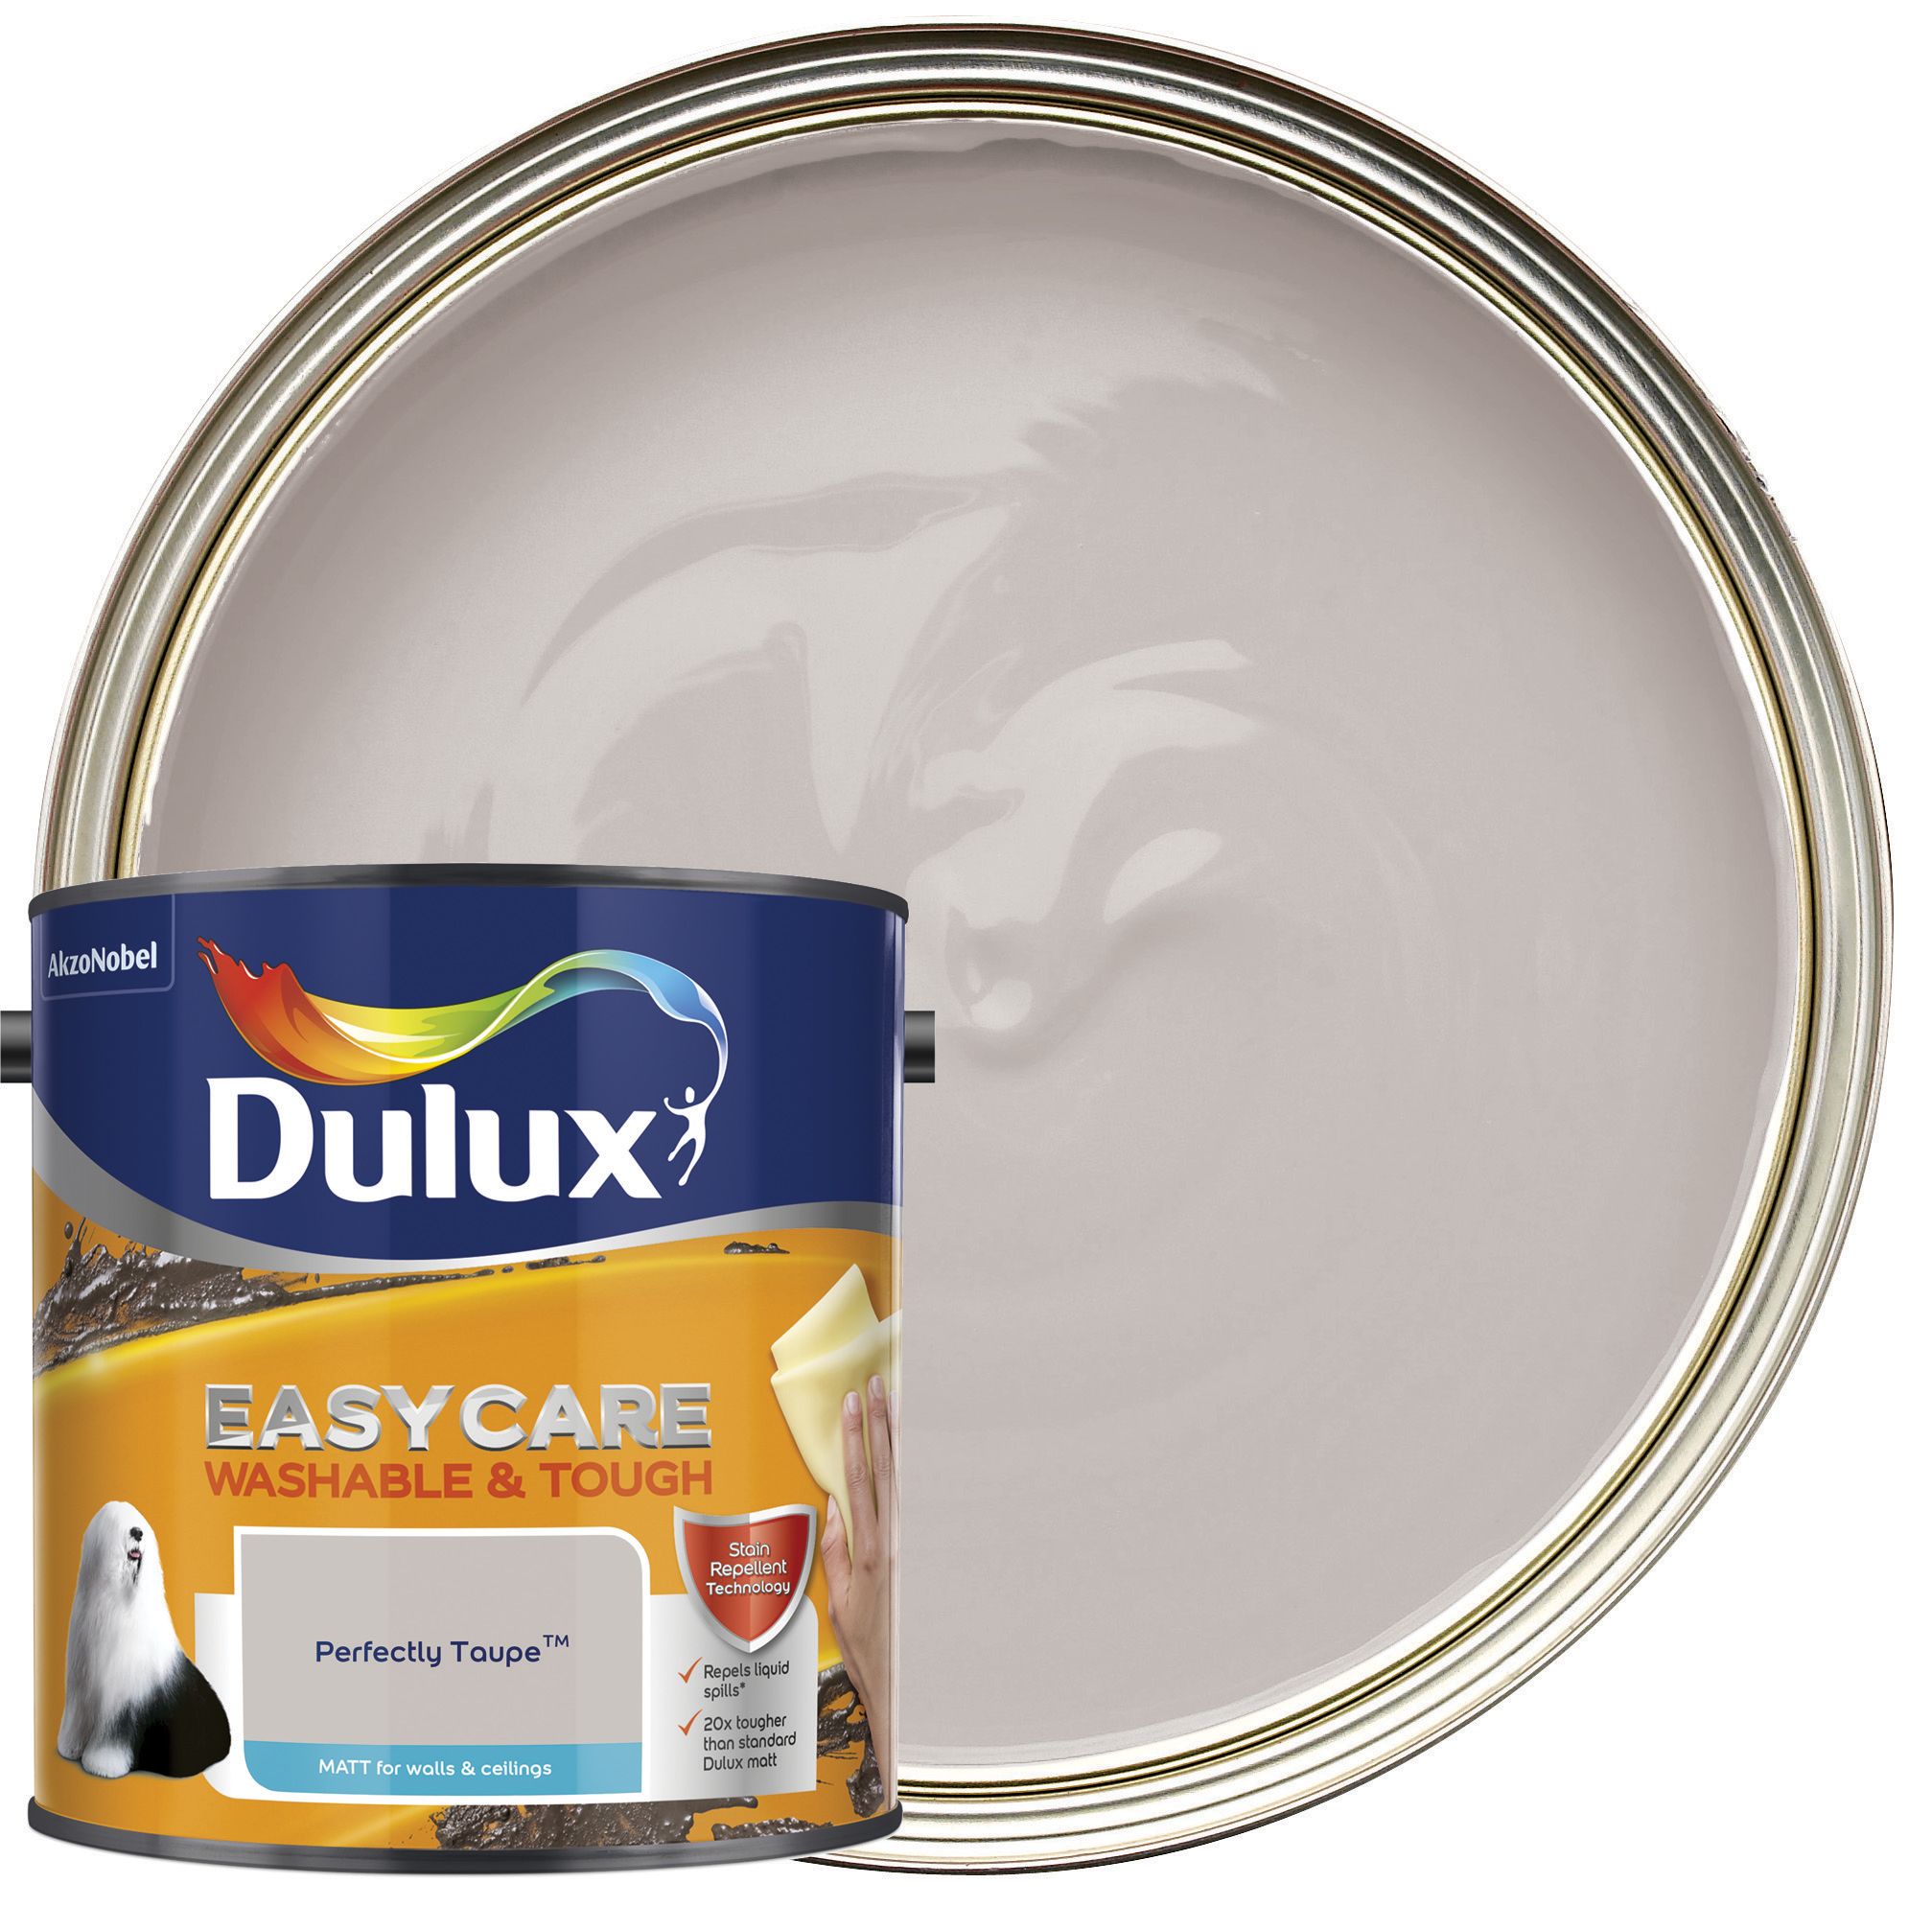 Dulux Easycare Washable & Tough Matt Emulsion Paint - Perfectly Taupe - 2.5L